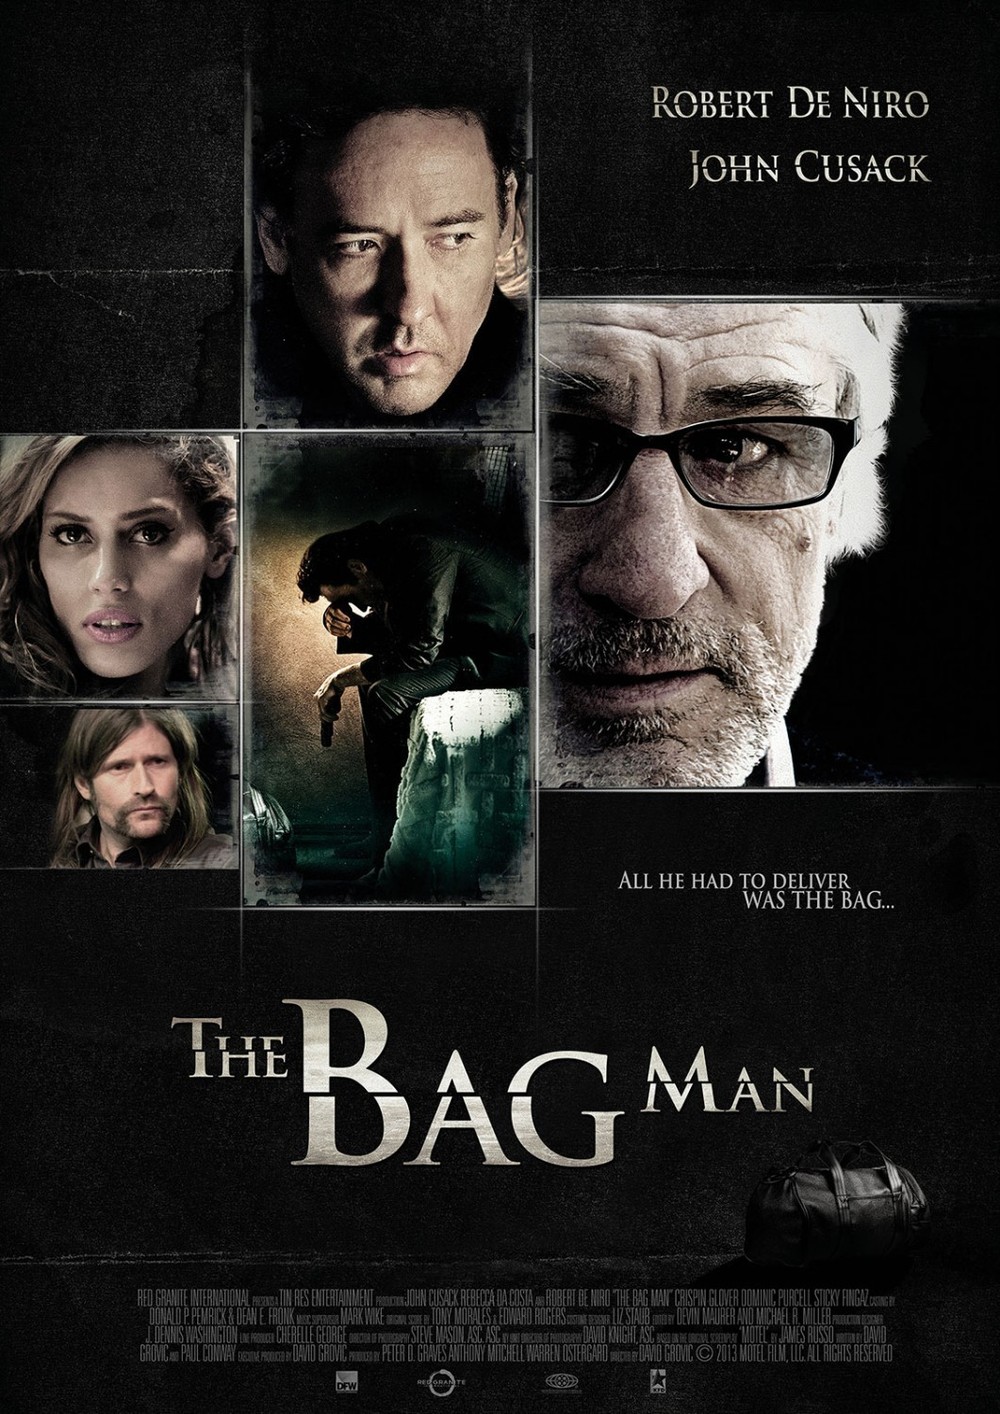 The Bag Man |Teaser Trailer